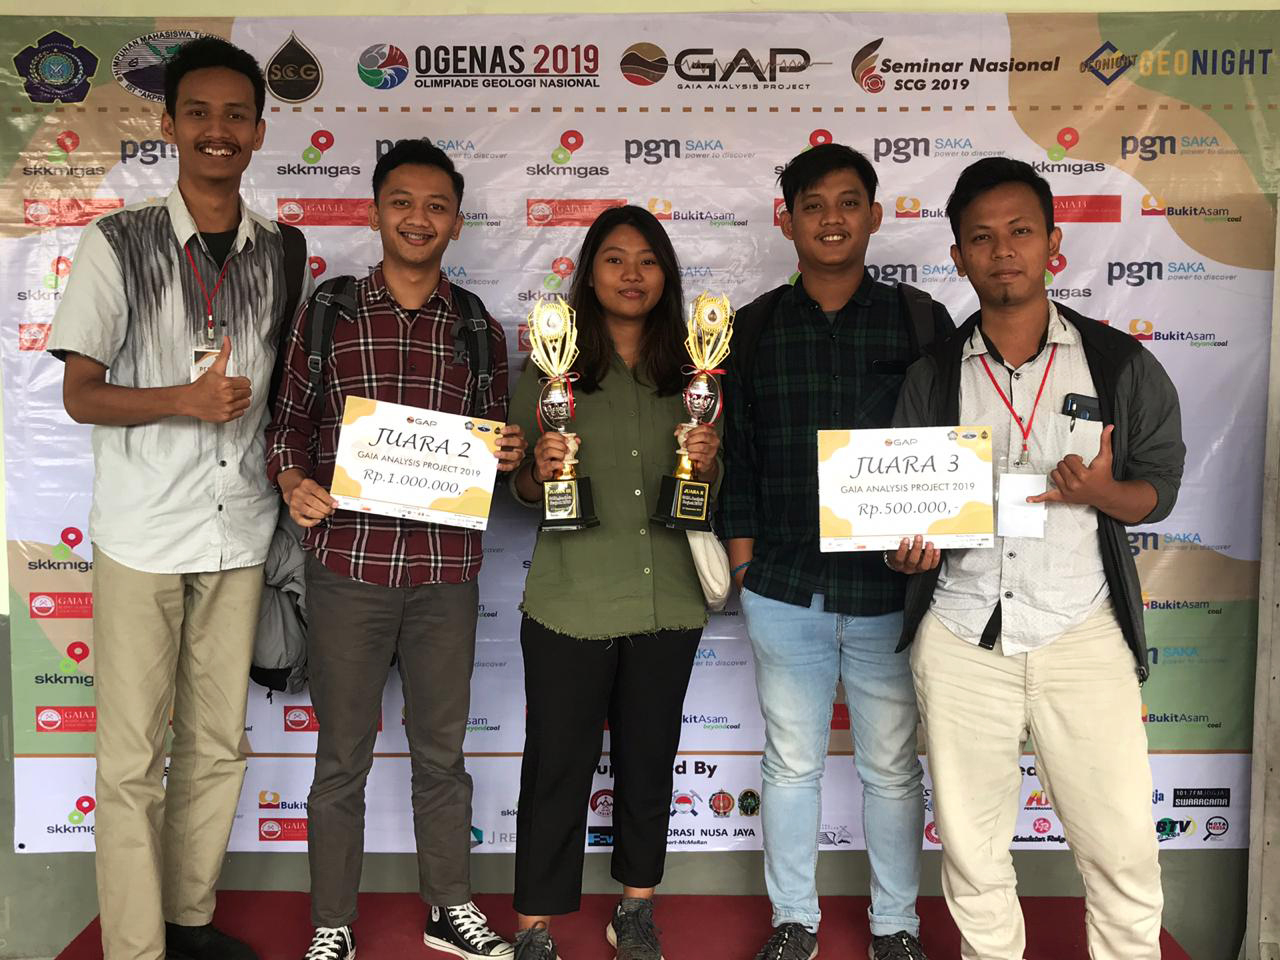 Mahasiswa Teknik Geologi ITNY Juara 2 dan 3 dalam acara Super Continent Gaia 2019 : “Gaia Analysis Project”